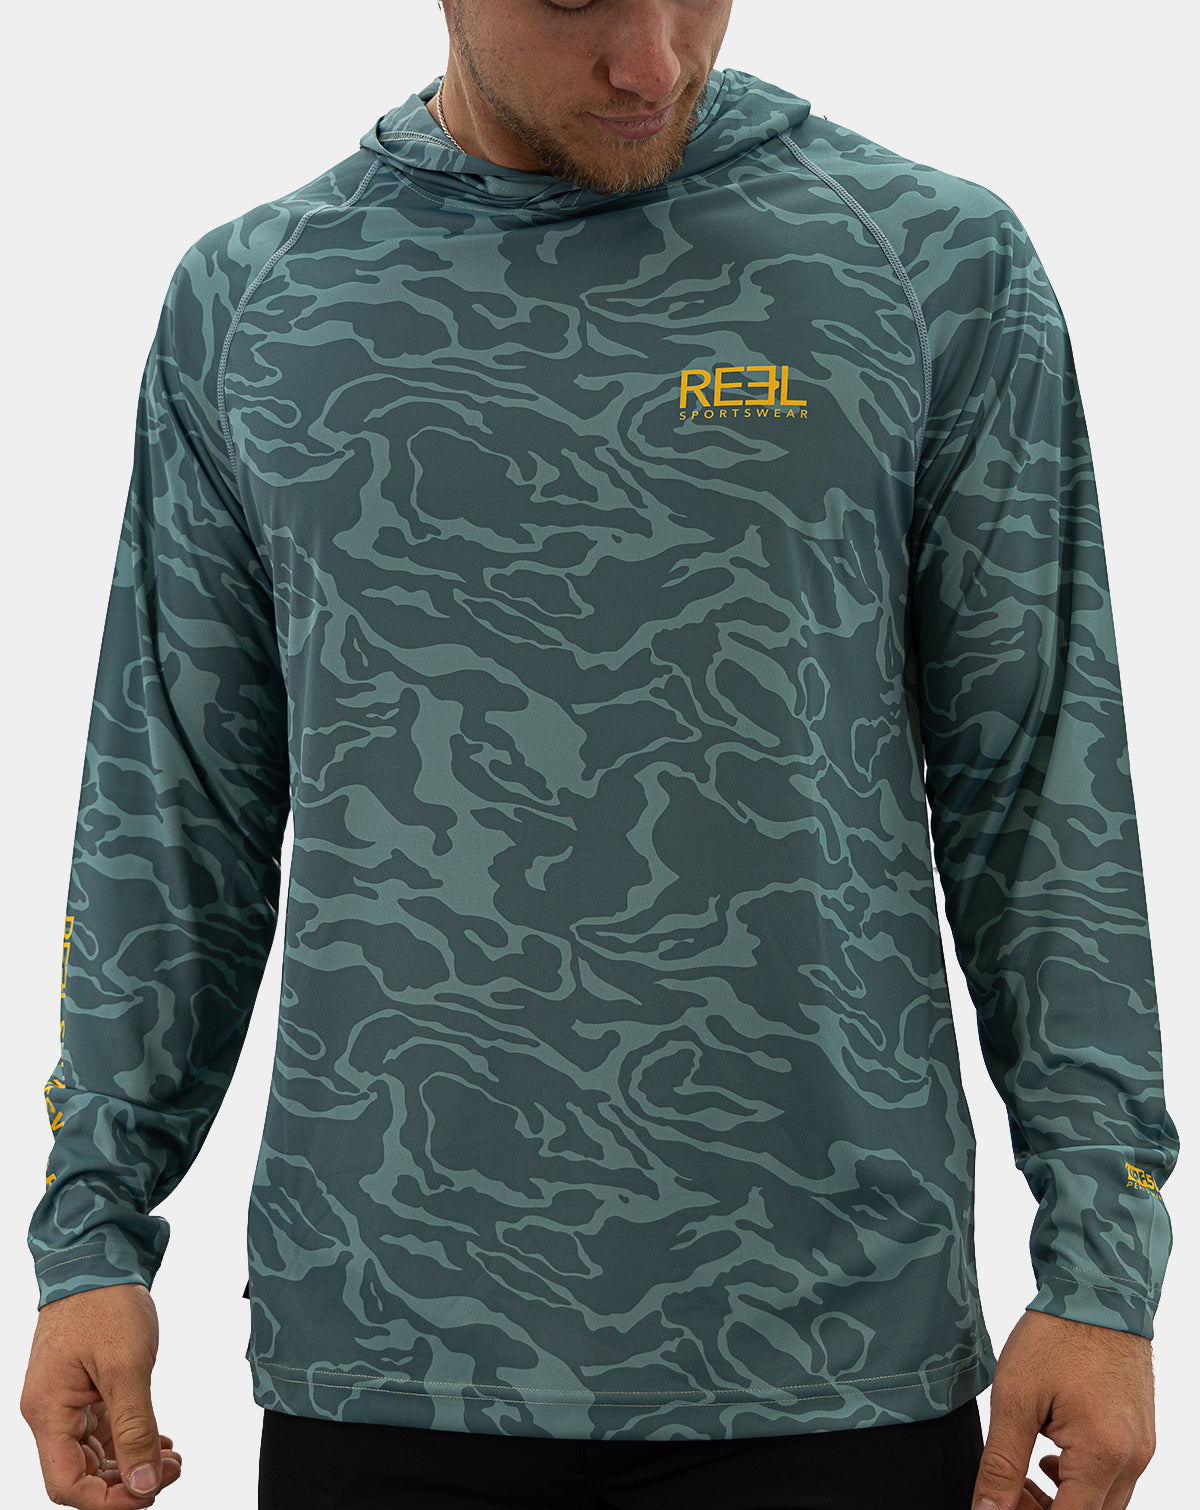 Reel Life Men’s Hooded Fishing Shirt XL Long Sleeve Light Hoodie Teal Blue  Aqua